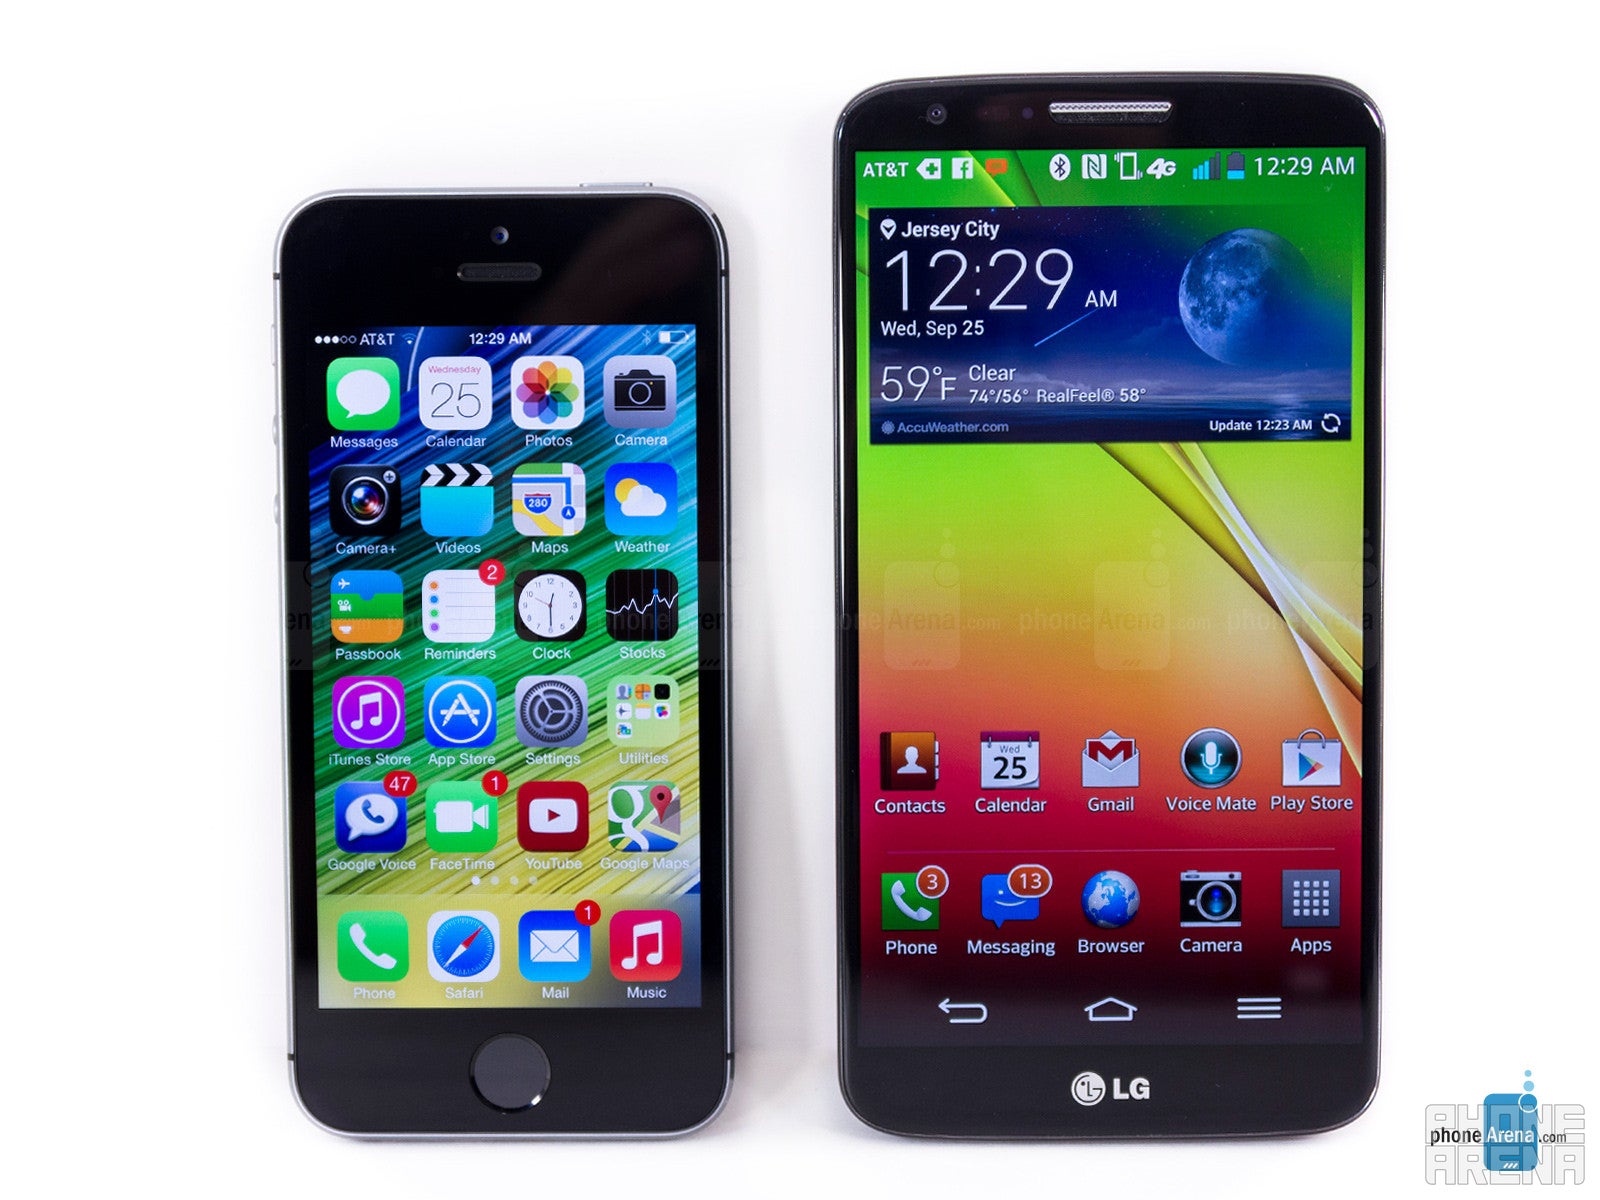 Apple iPhone 5s vs LG G2